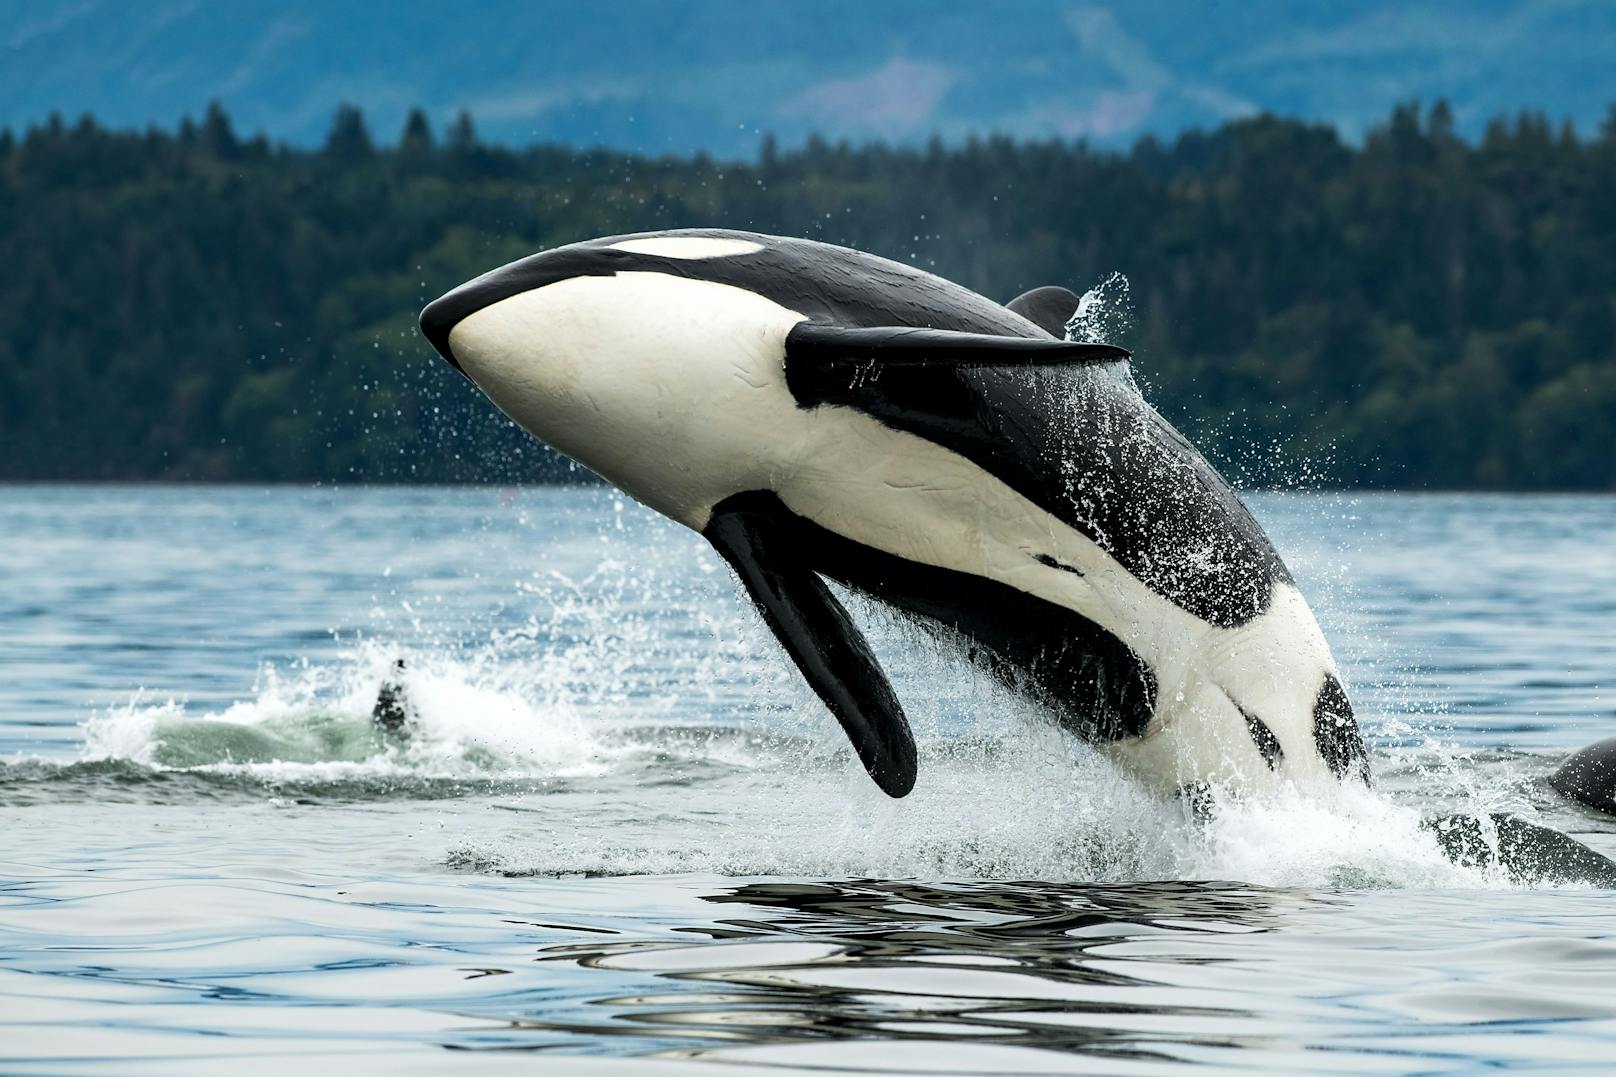 "Immer heftiger" – Orca-Attacken geben Rätsel auf